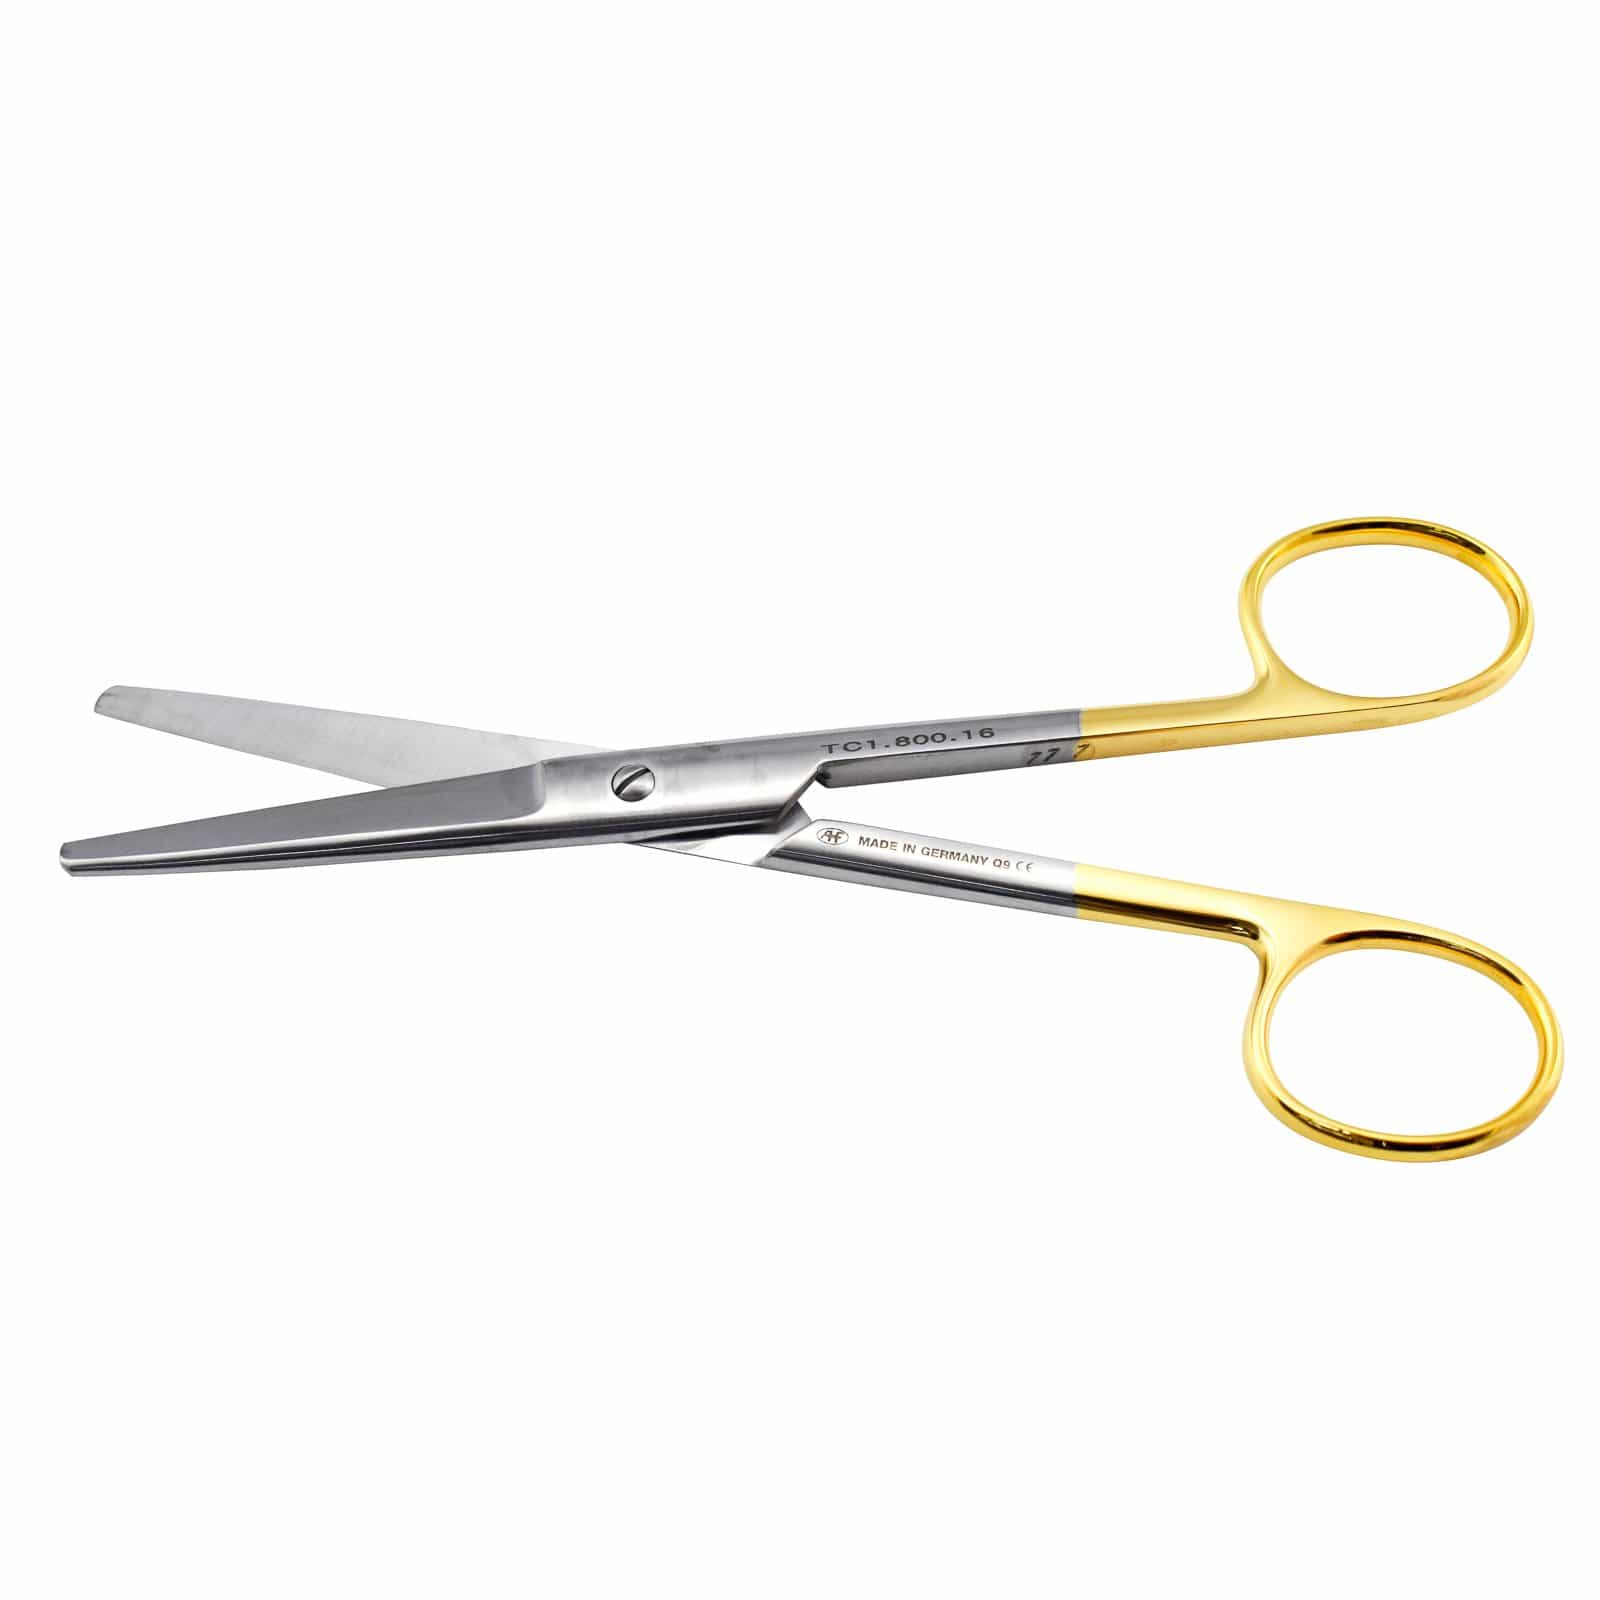 Hipp Surgical Instruments 16.5cm / Straight +TC / Blunt/Blunt Hipp Surgical Scissors